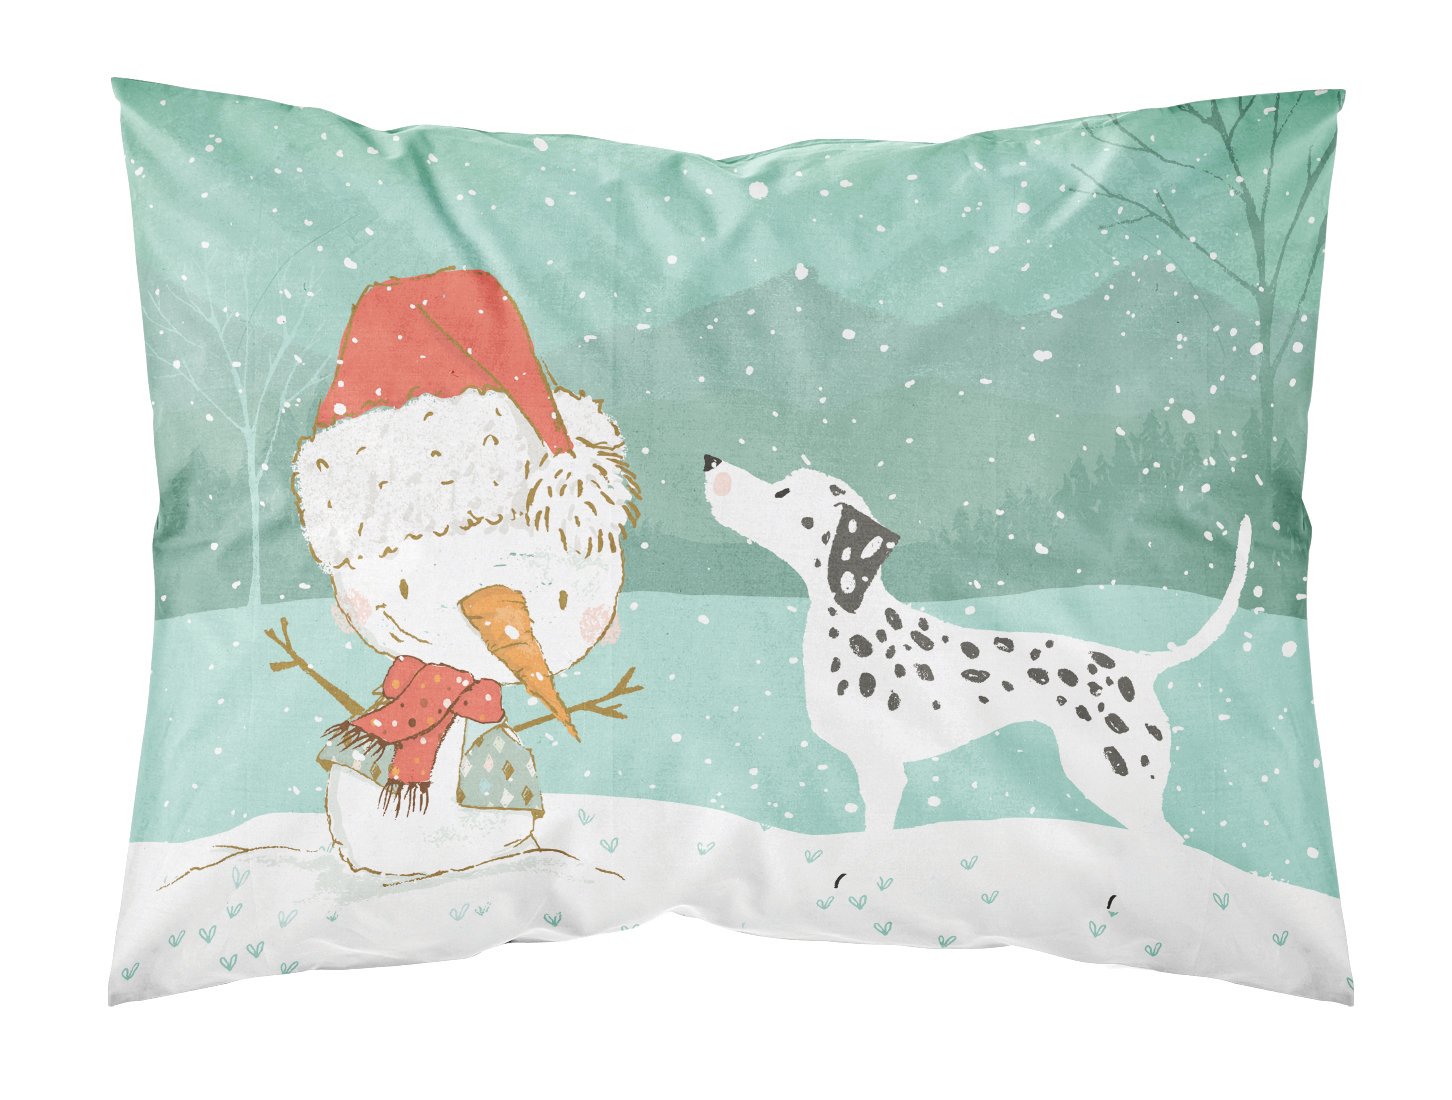 Dalmatian and Snowman Christmas Fabric Standard Pillowcase CK2037PILLOWCASE by Caroline's Treasures